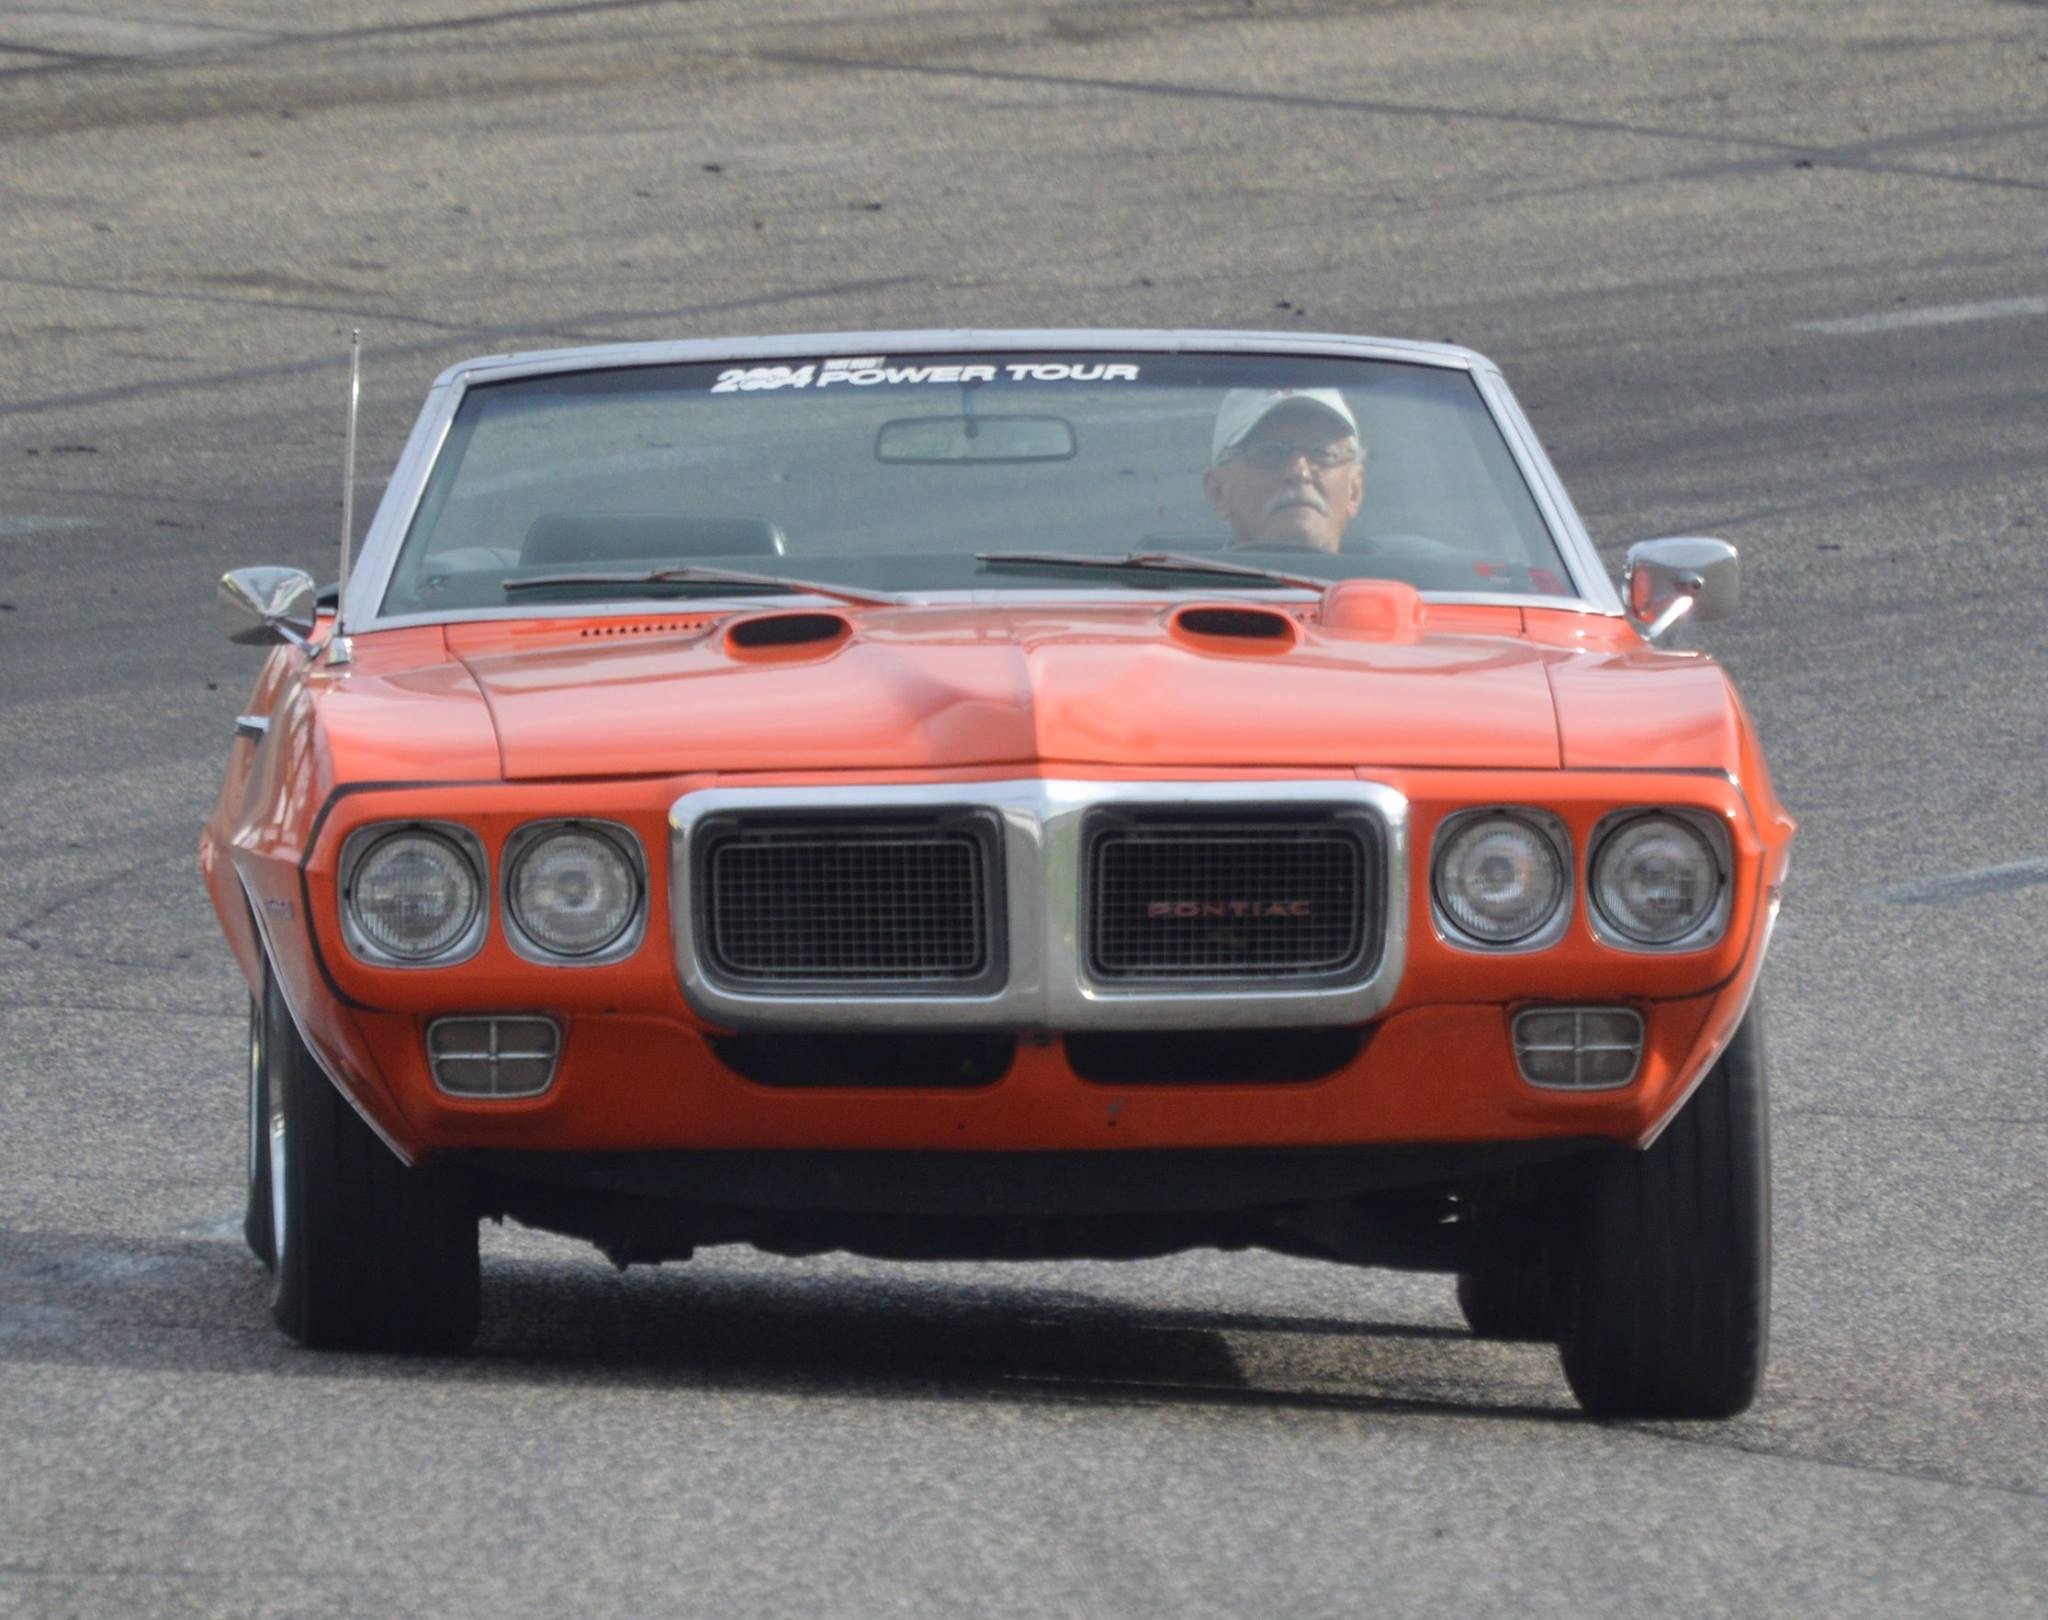 Pontiac Adventures on Track